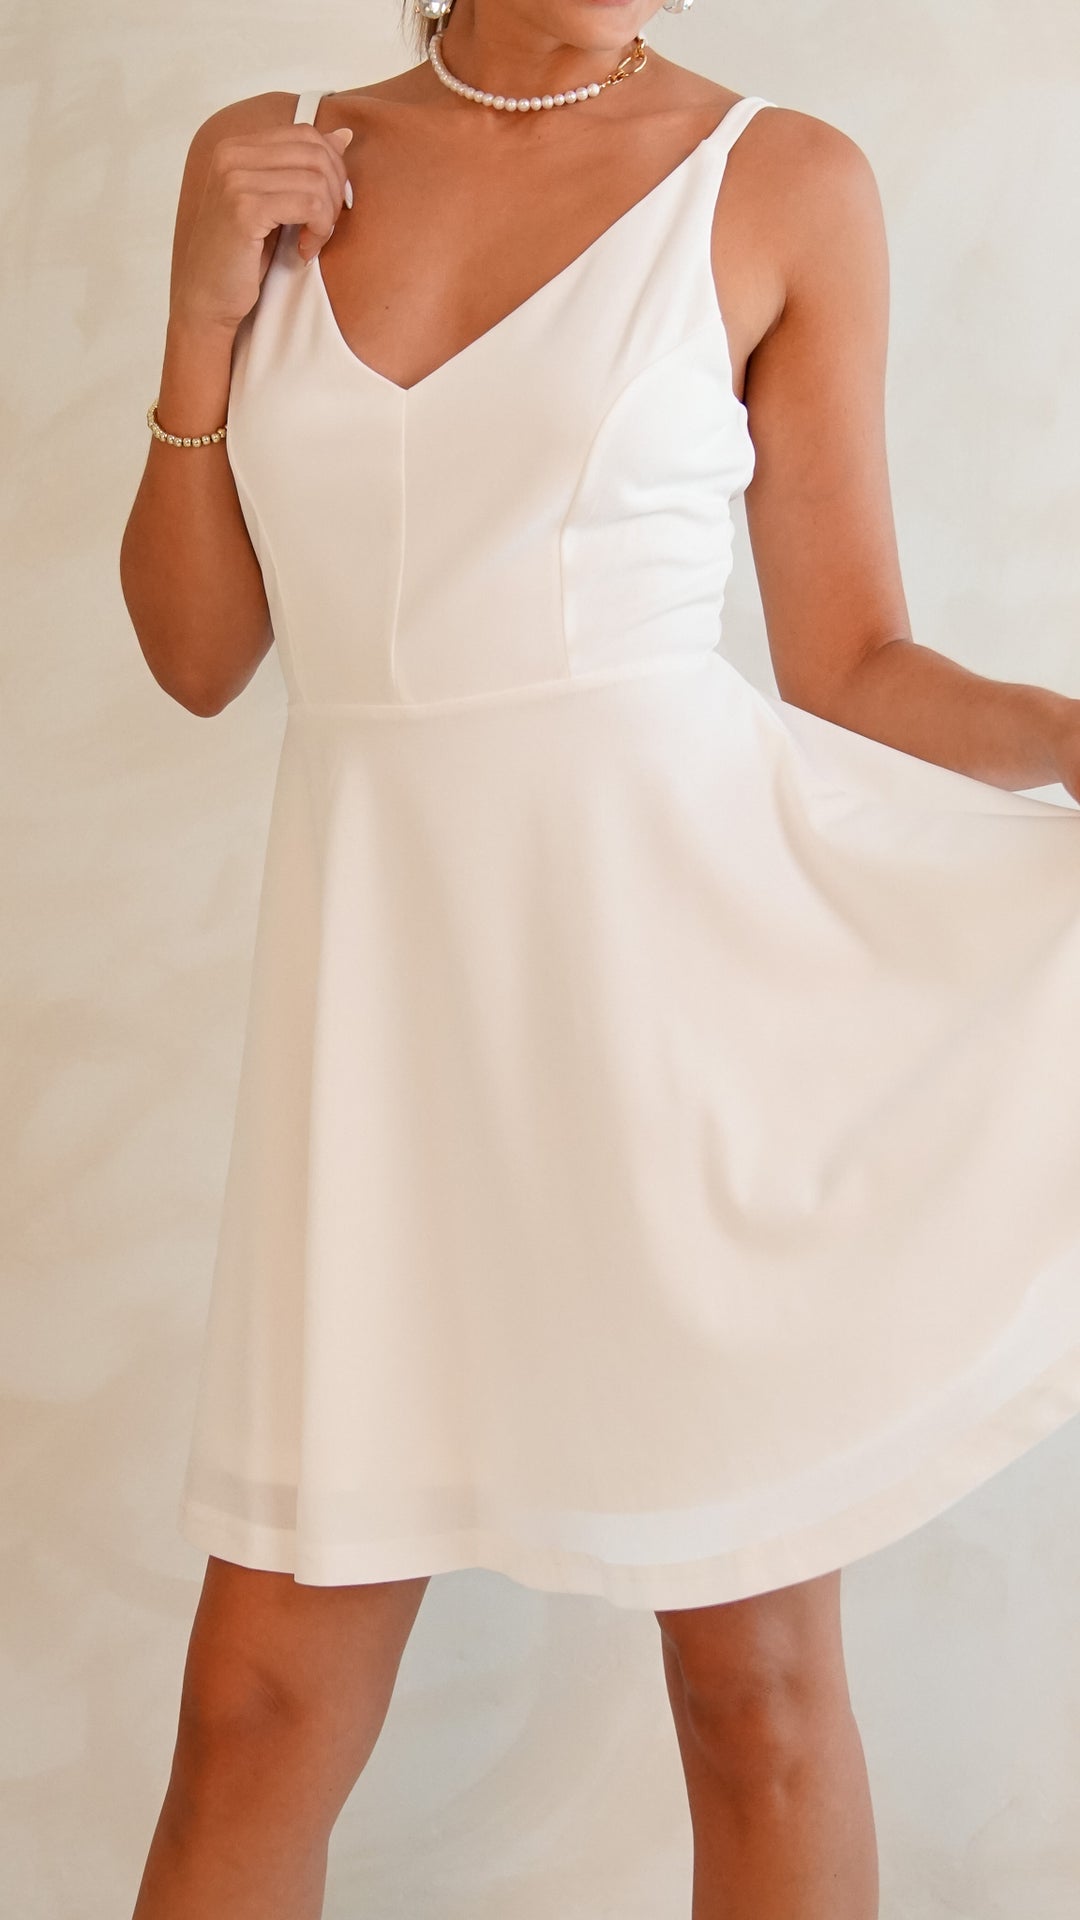 Isidora Mini Dress in White - Steps New York